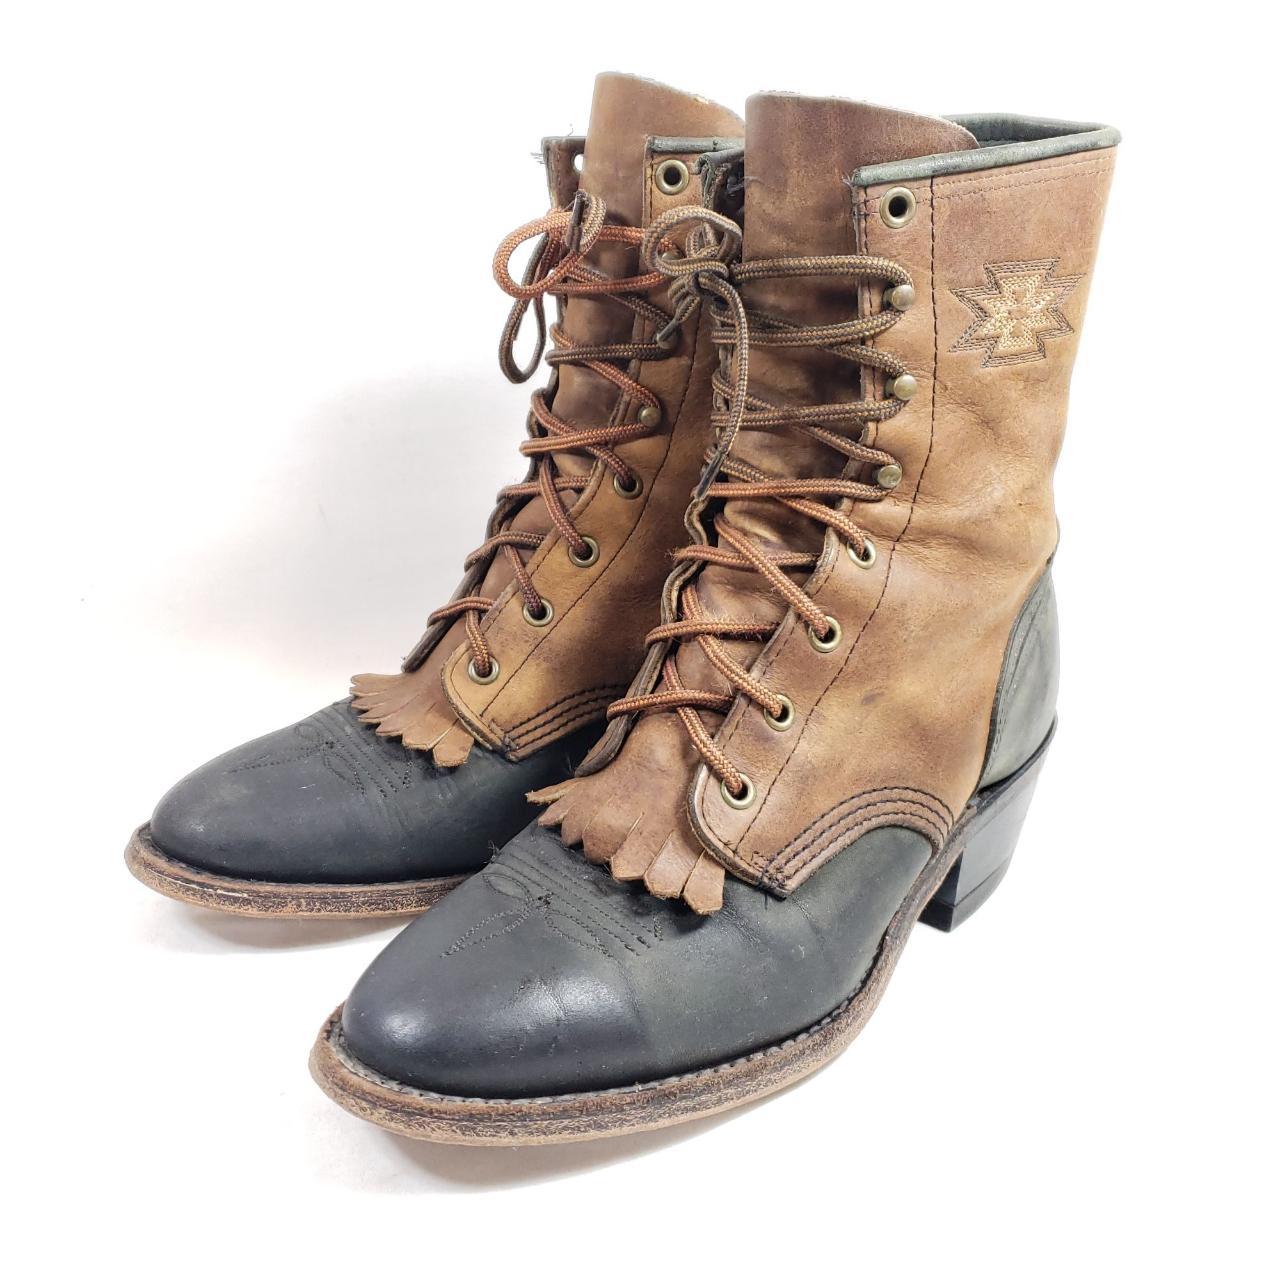 Abilene Ladies Vintage Lace Up Boot - Black - Ladies' Western Boots